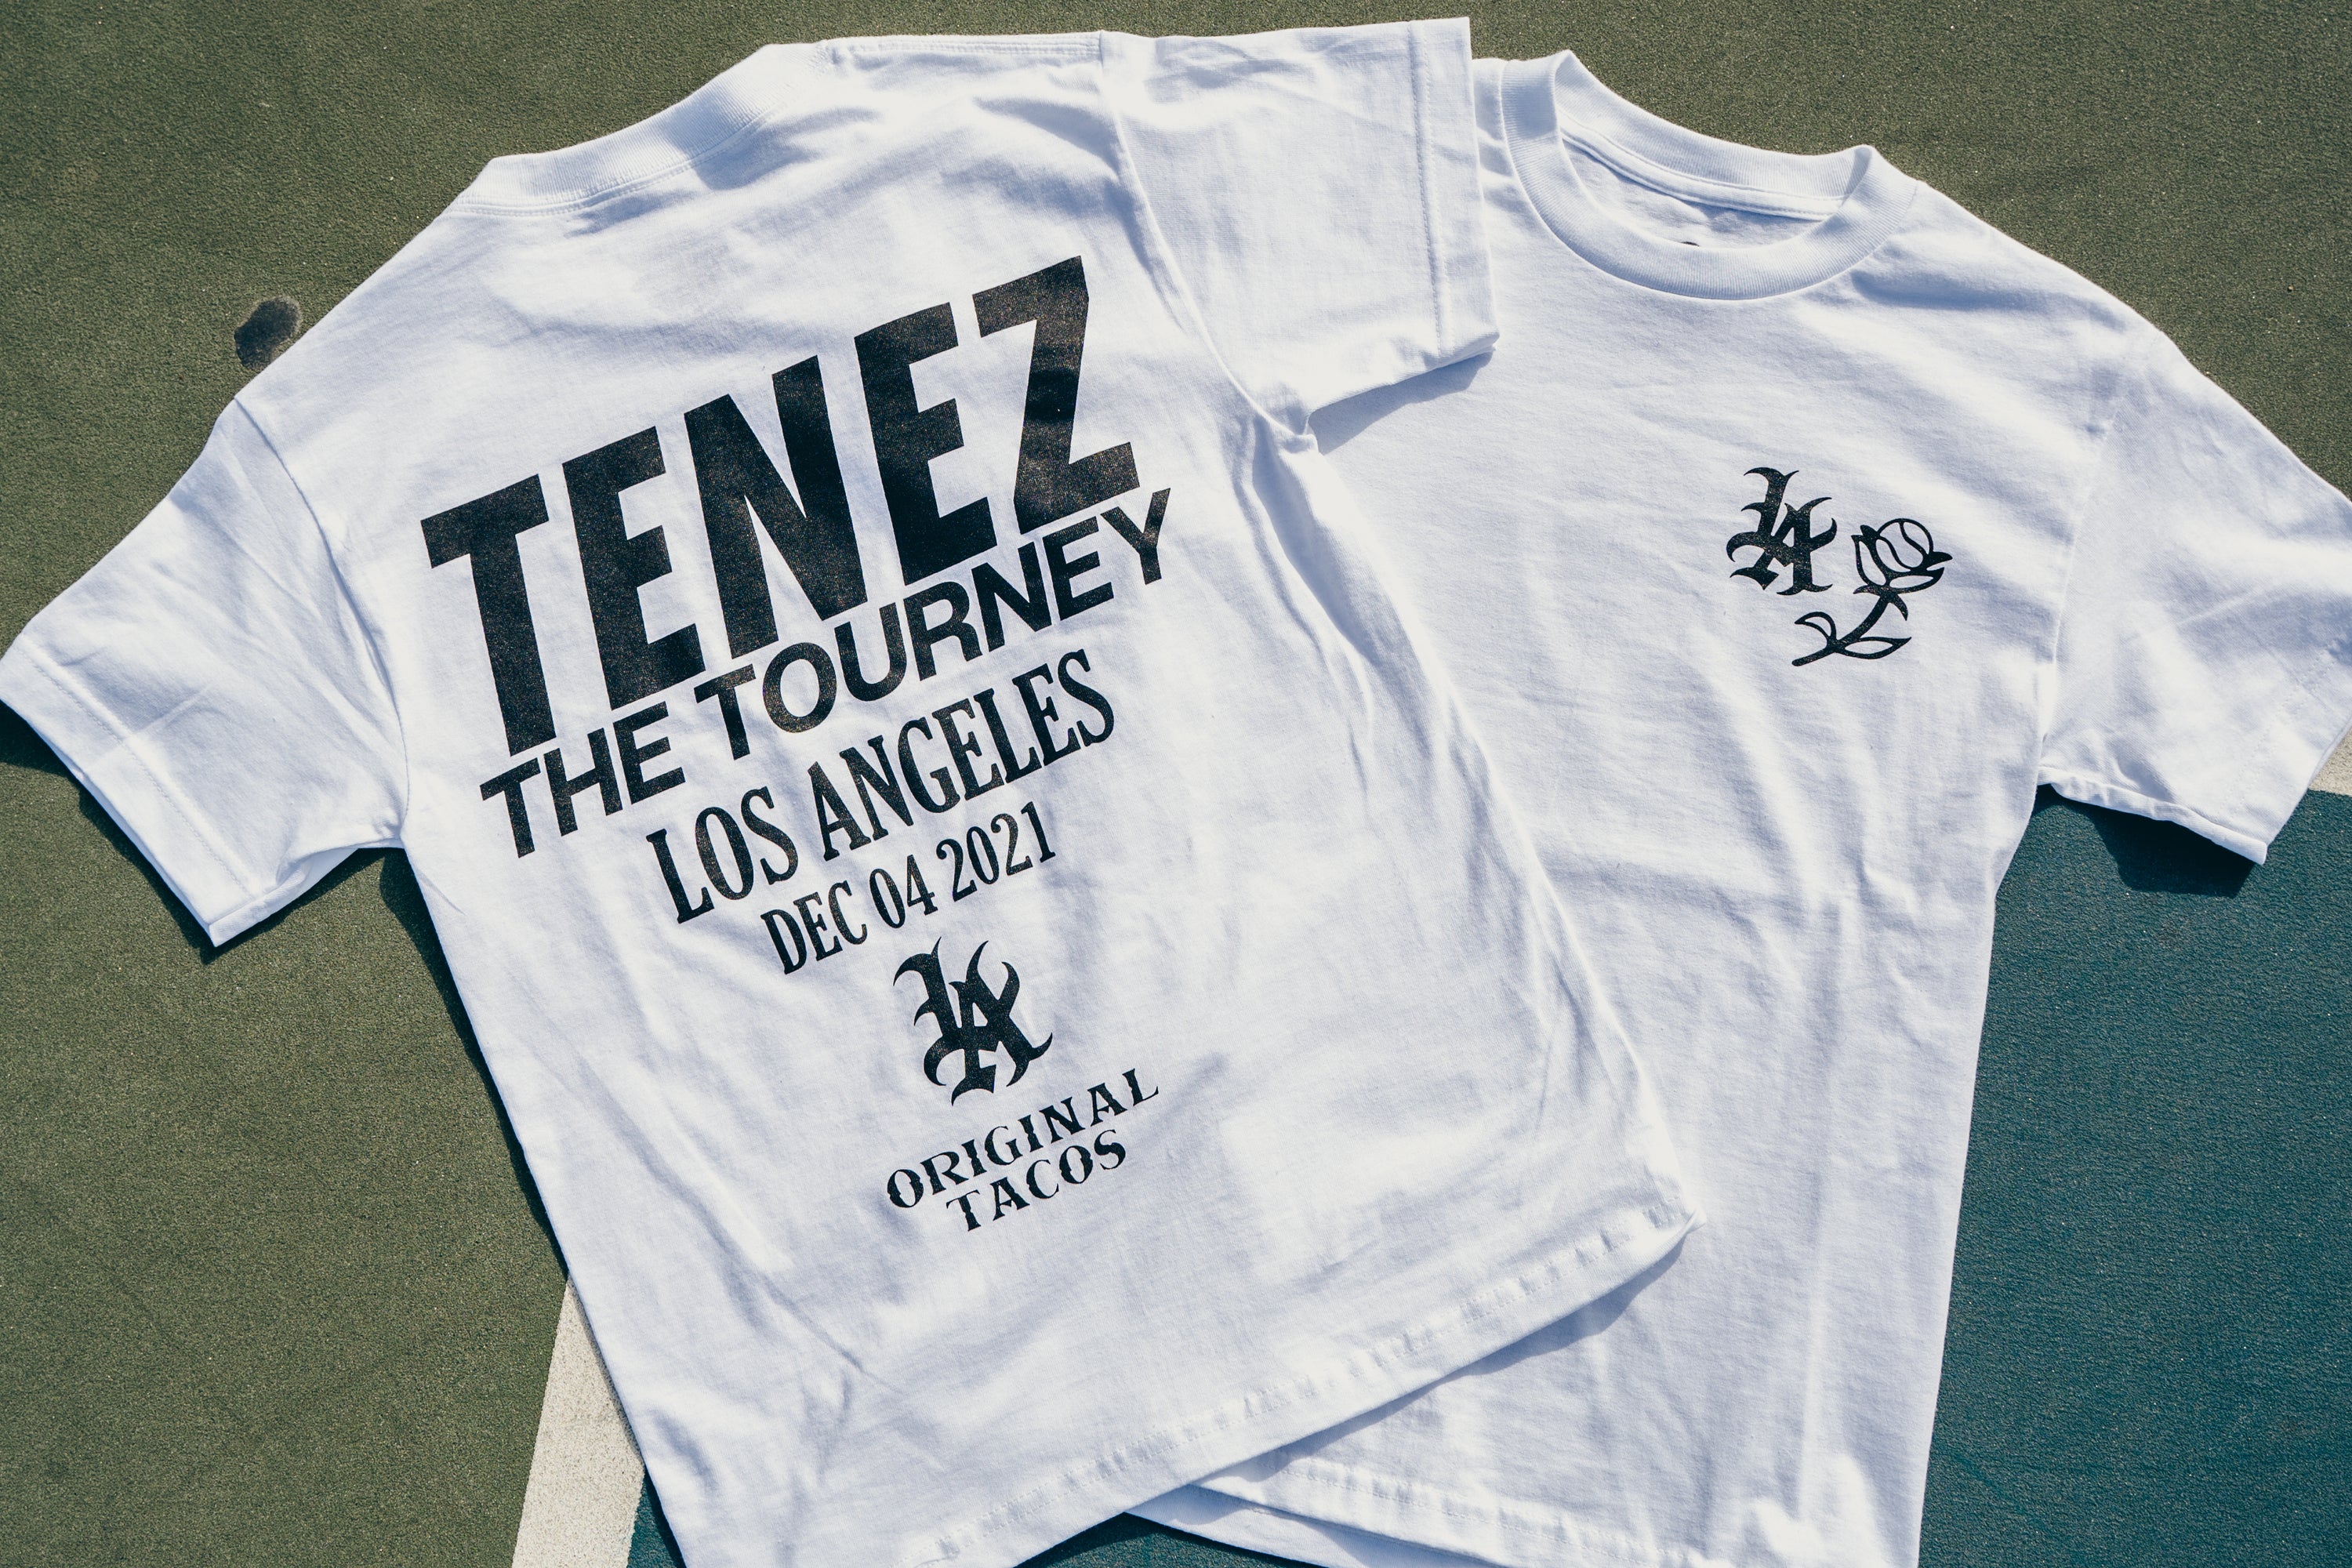 LA ORIGINAL TACOS x TENEZ TOURNEY T-SHIRT